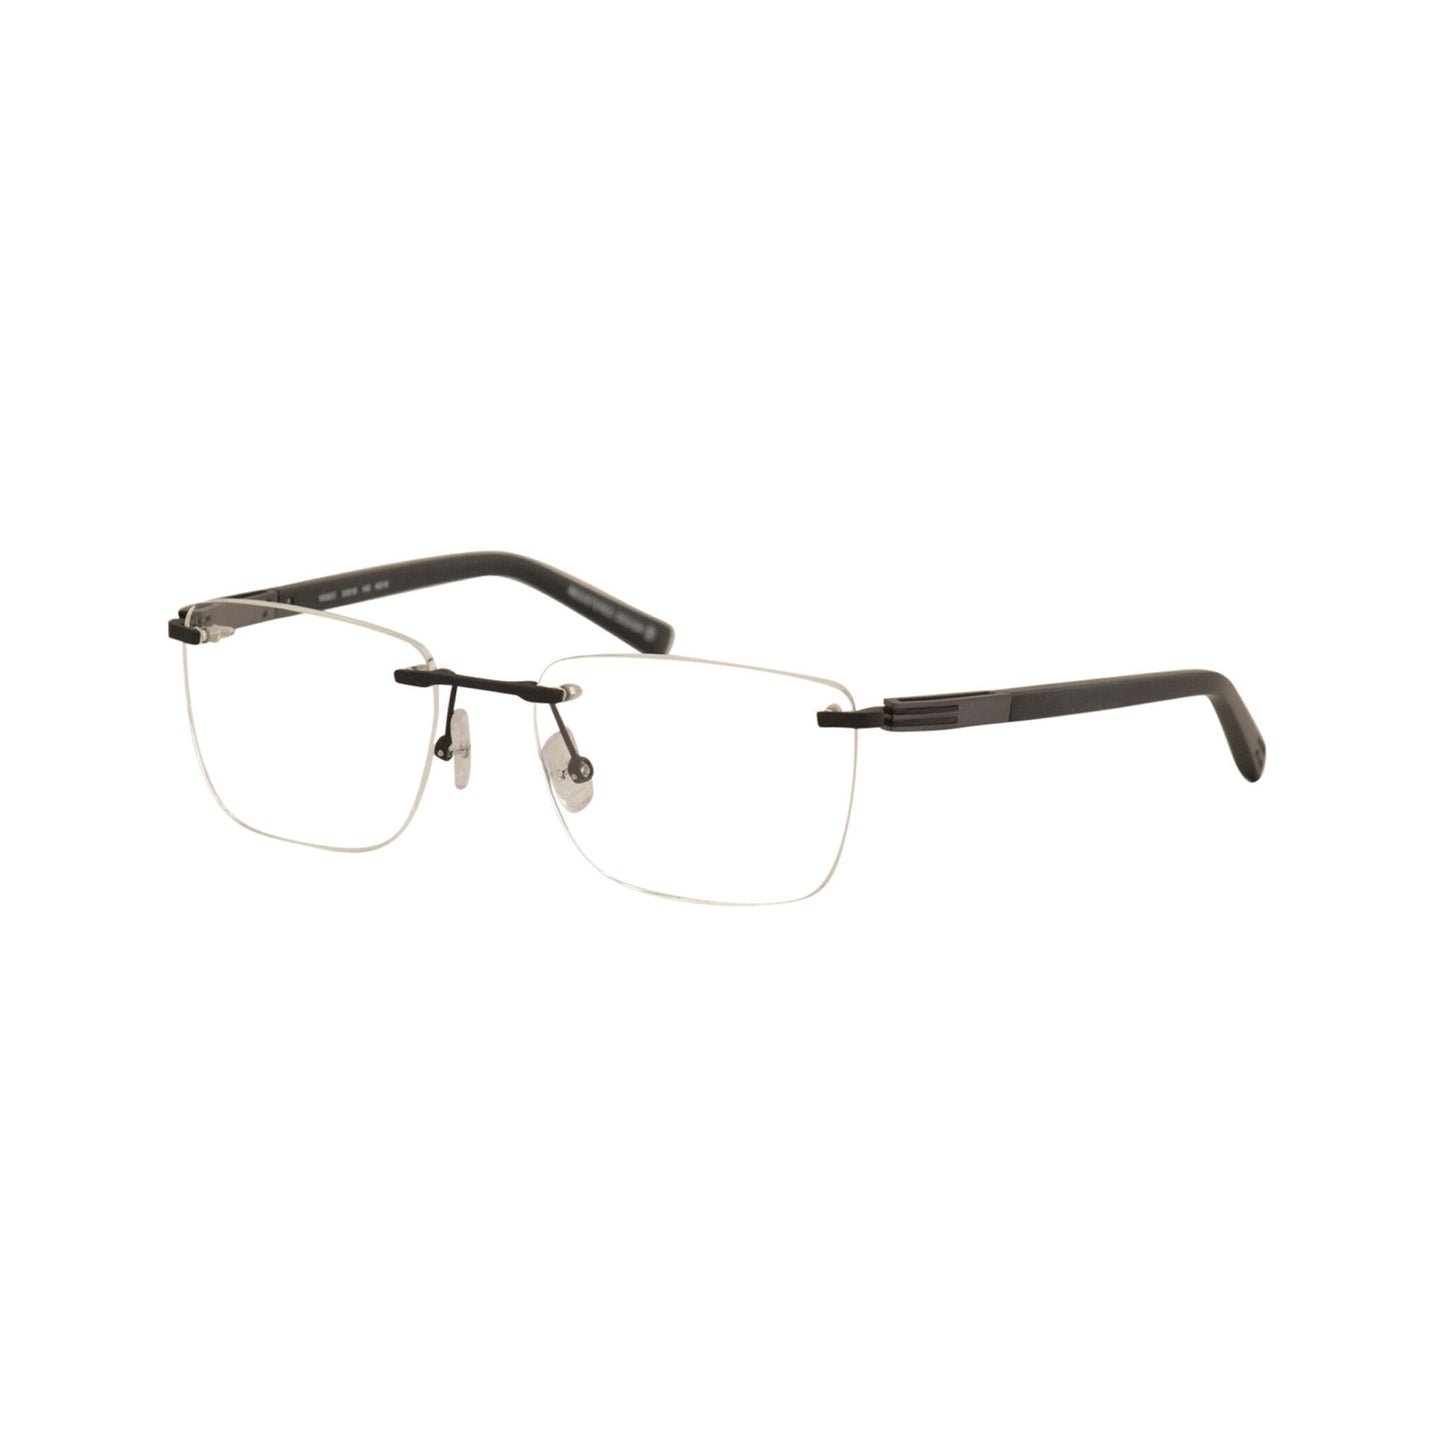 Oga By Morel Black Square Acetate Rimless Eyeglasses. Made in France. 100920-Y22 NG19